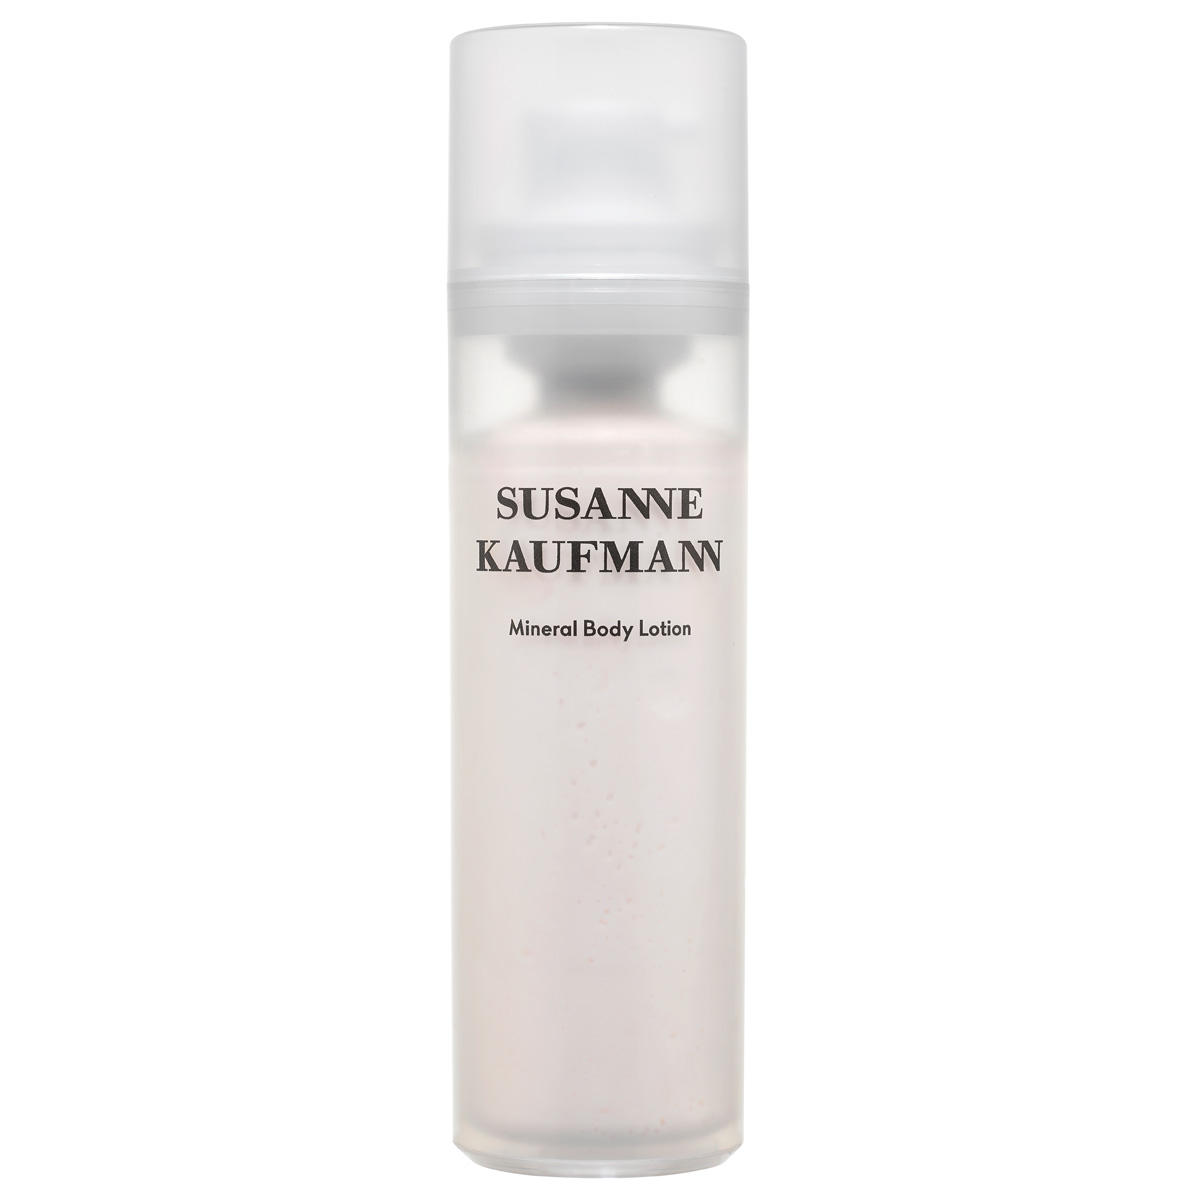 Susanne Kaufmann Mineralsalz Körperlotion - Mineral Body Lotion 200 ml - 1